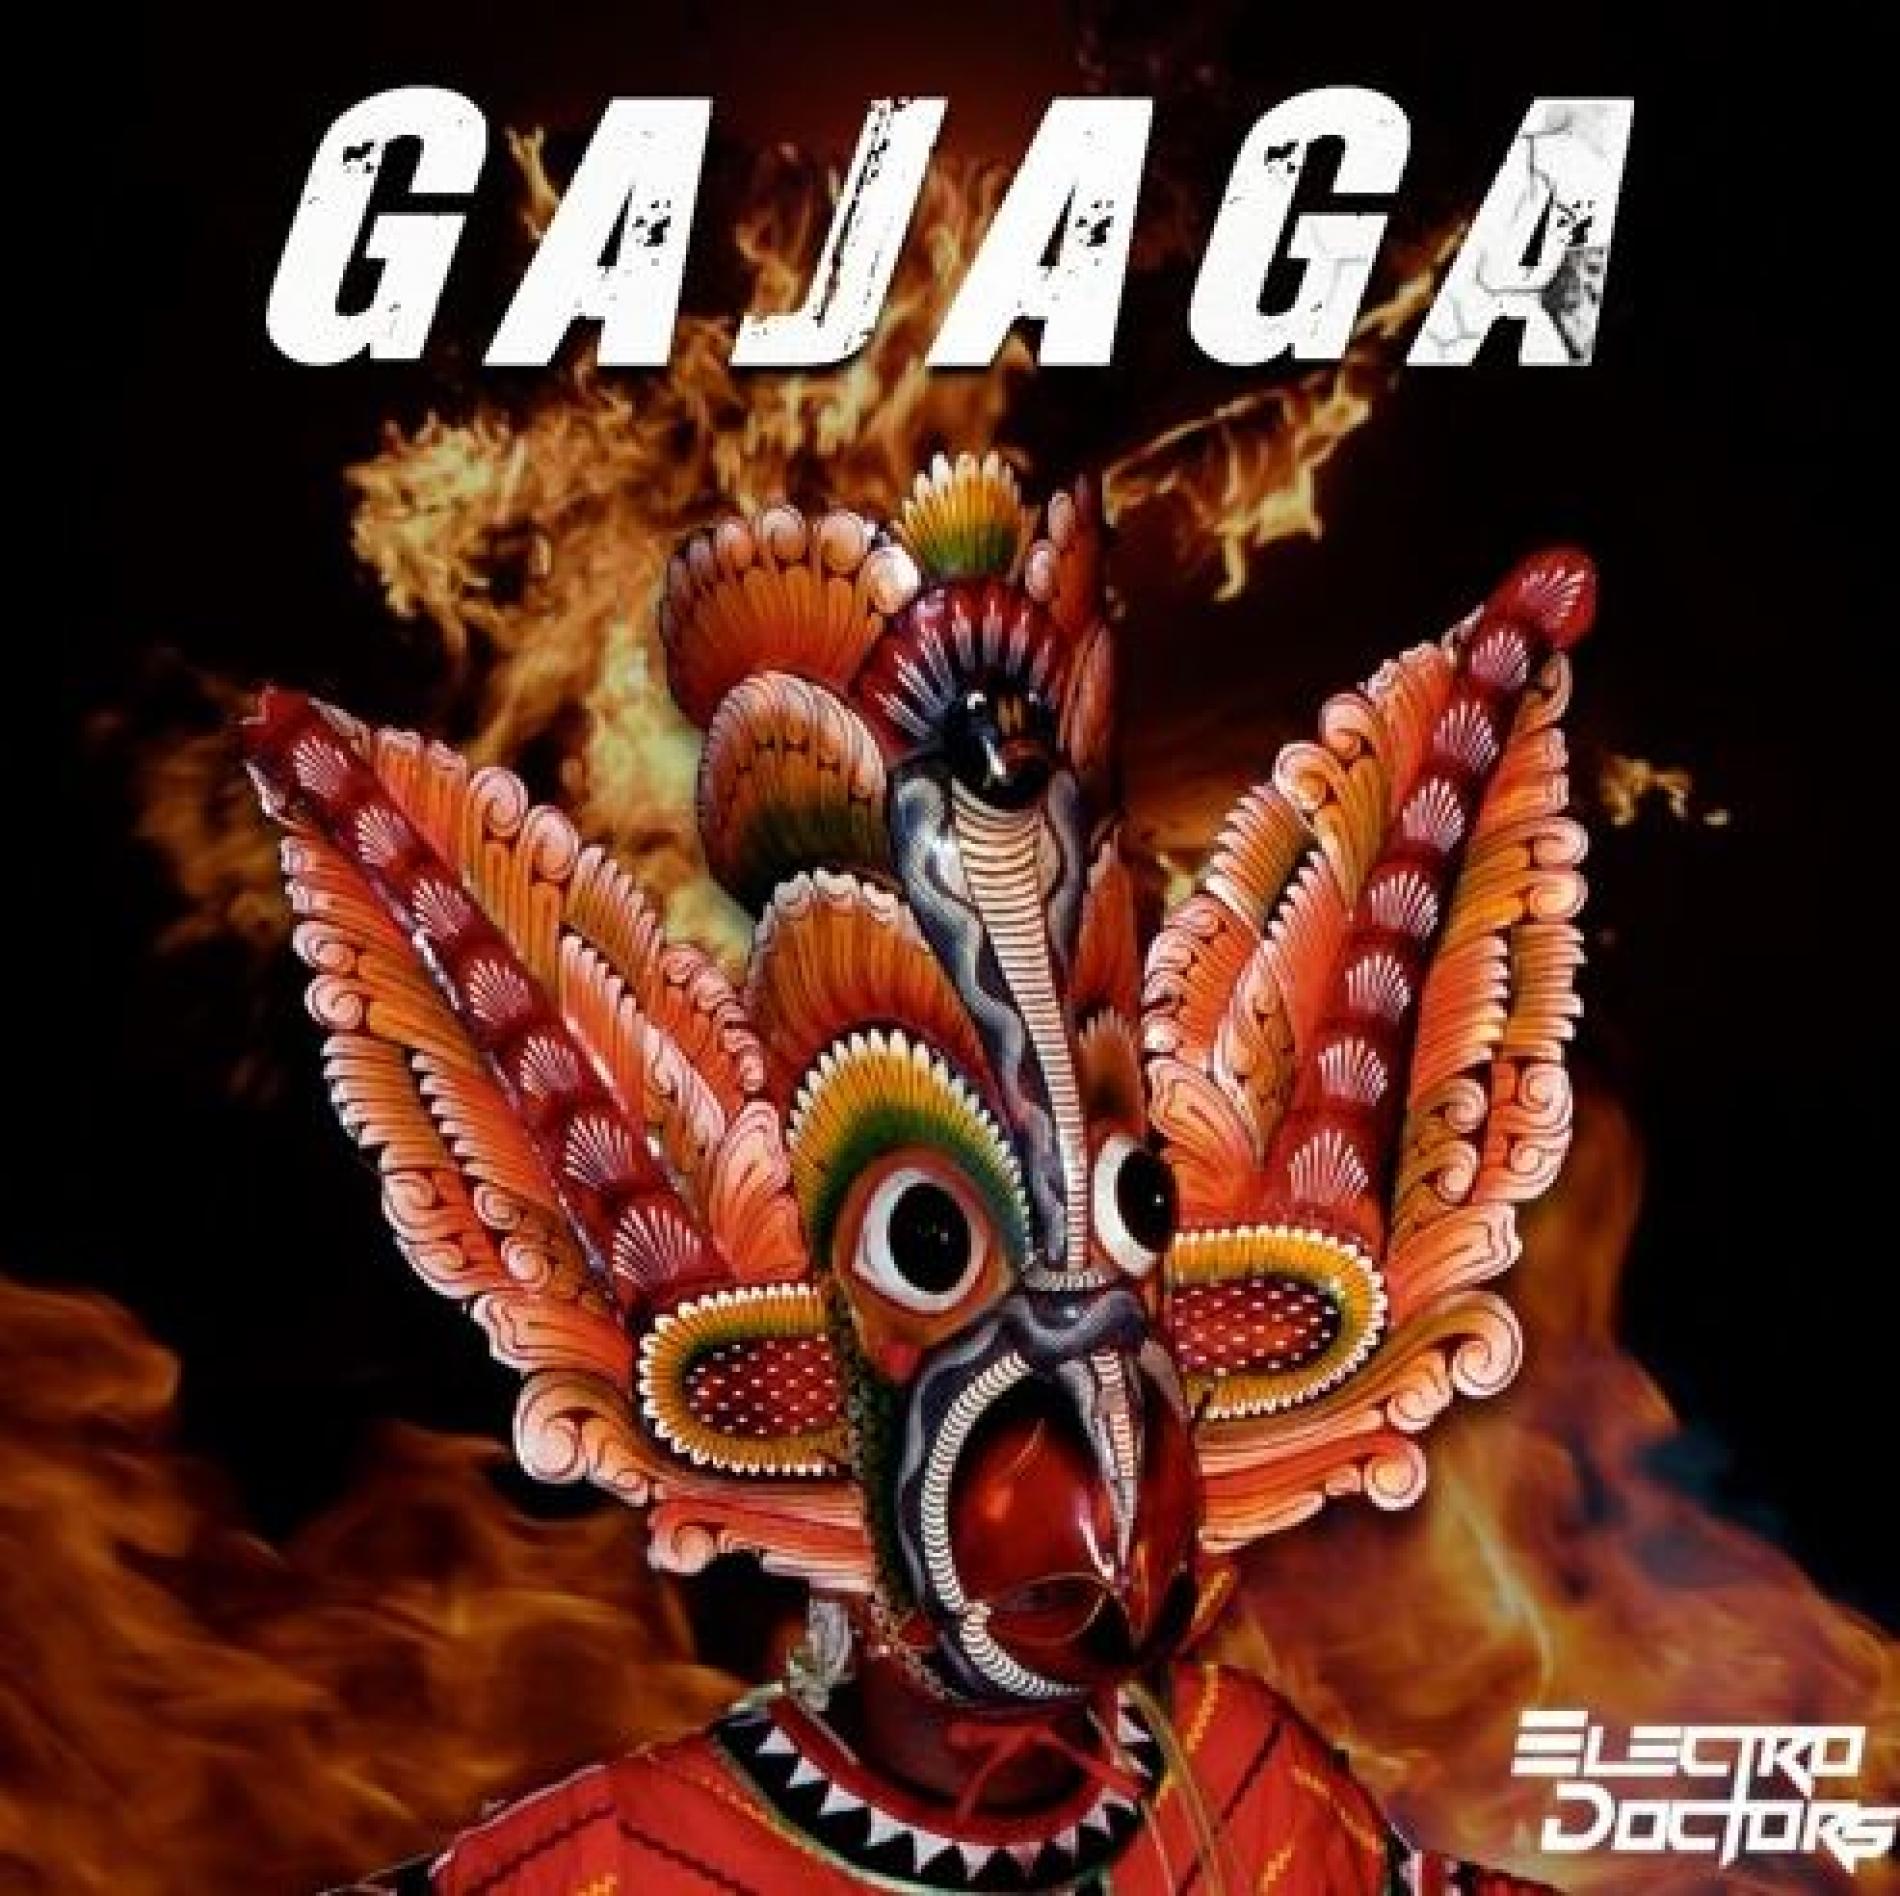 Electro Doctors – Gajaga (Original Mix)